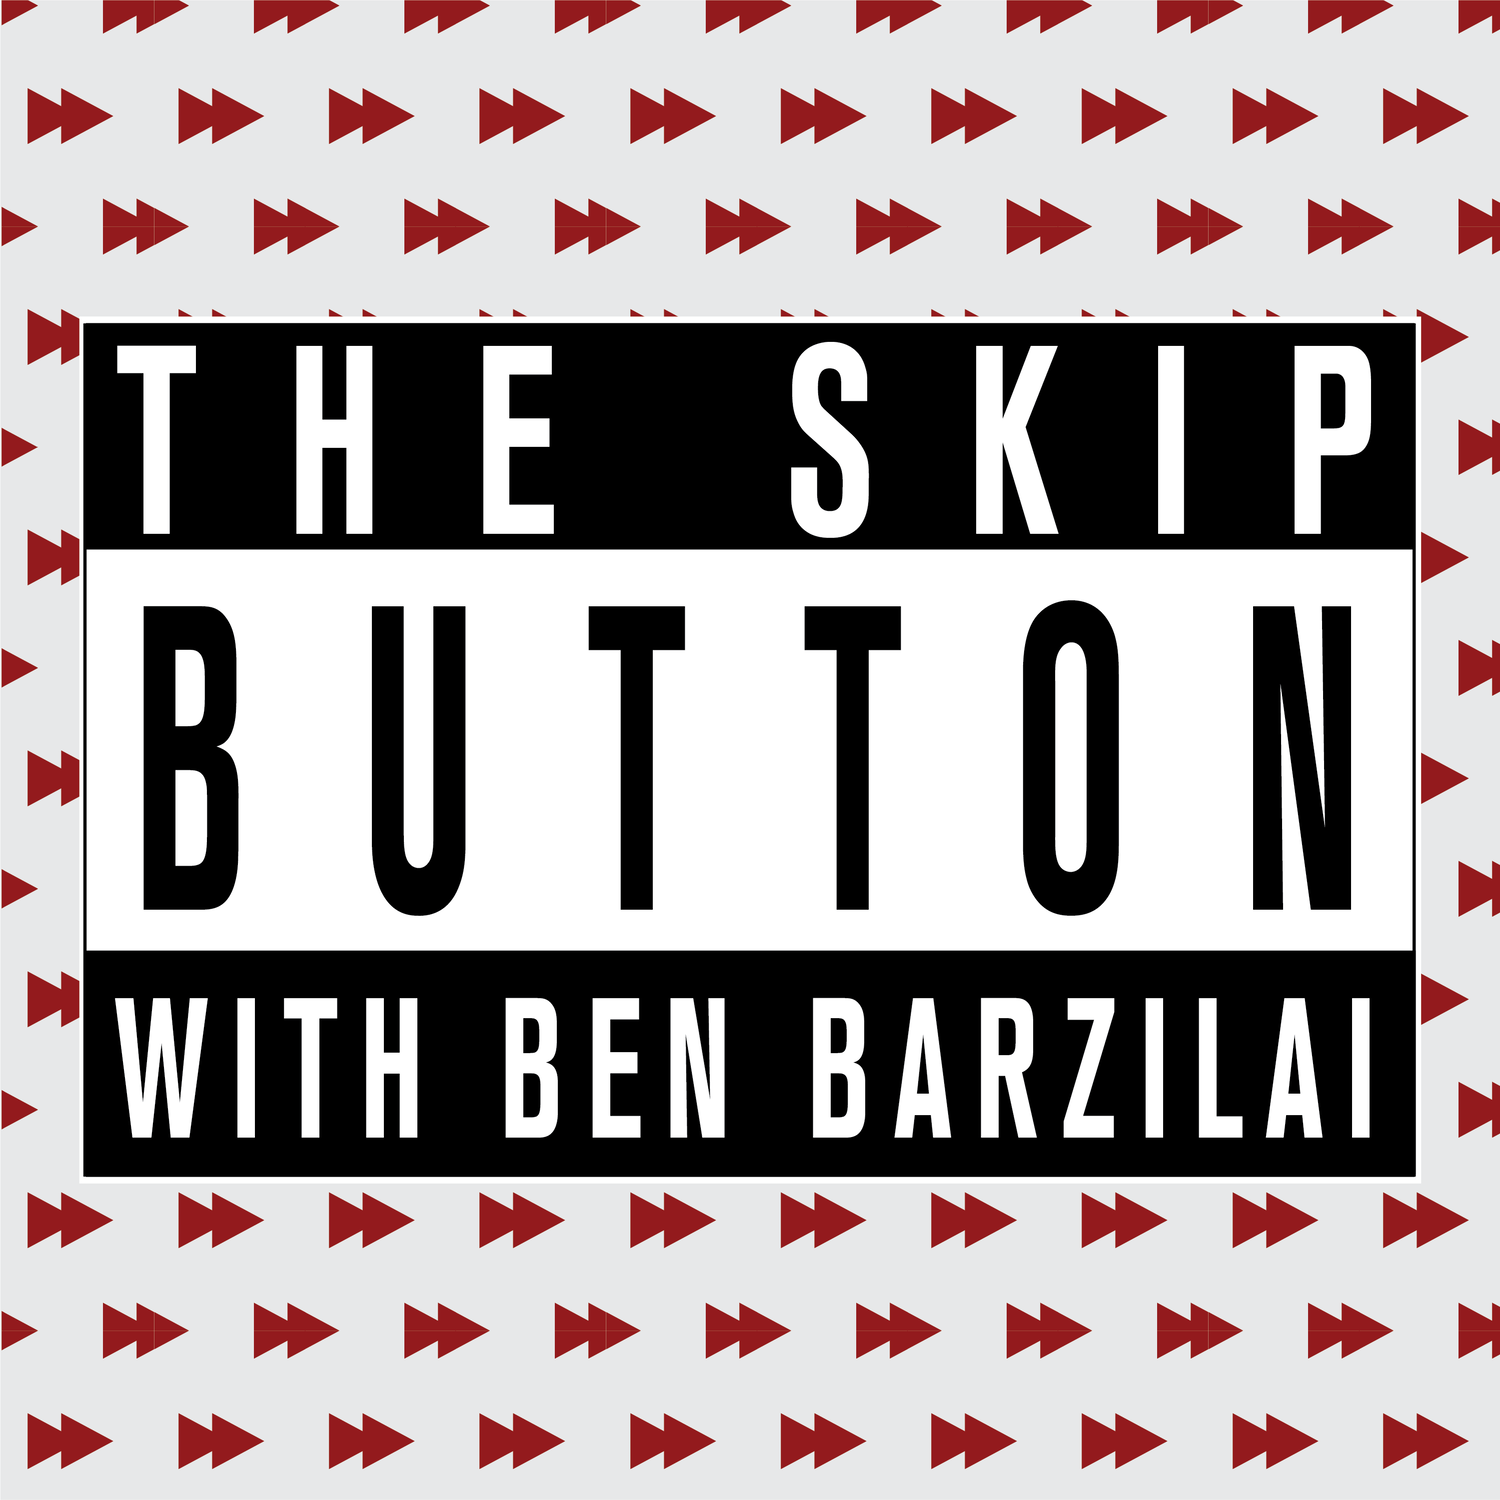 Skip Button